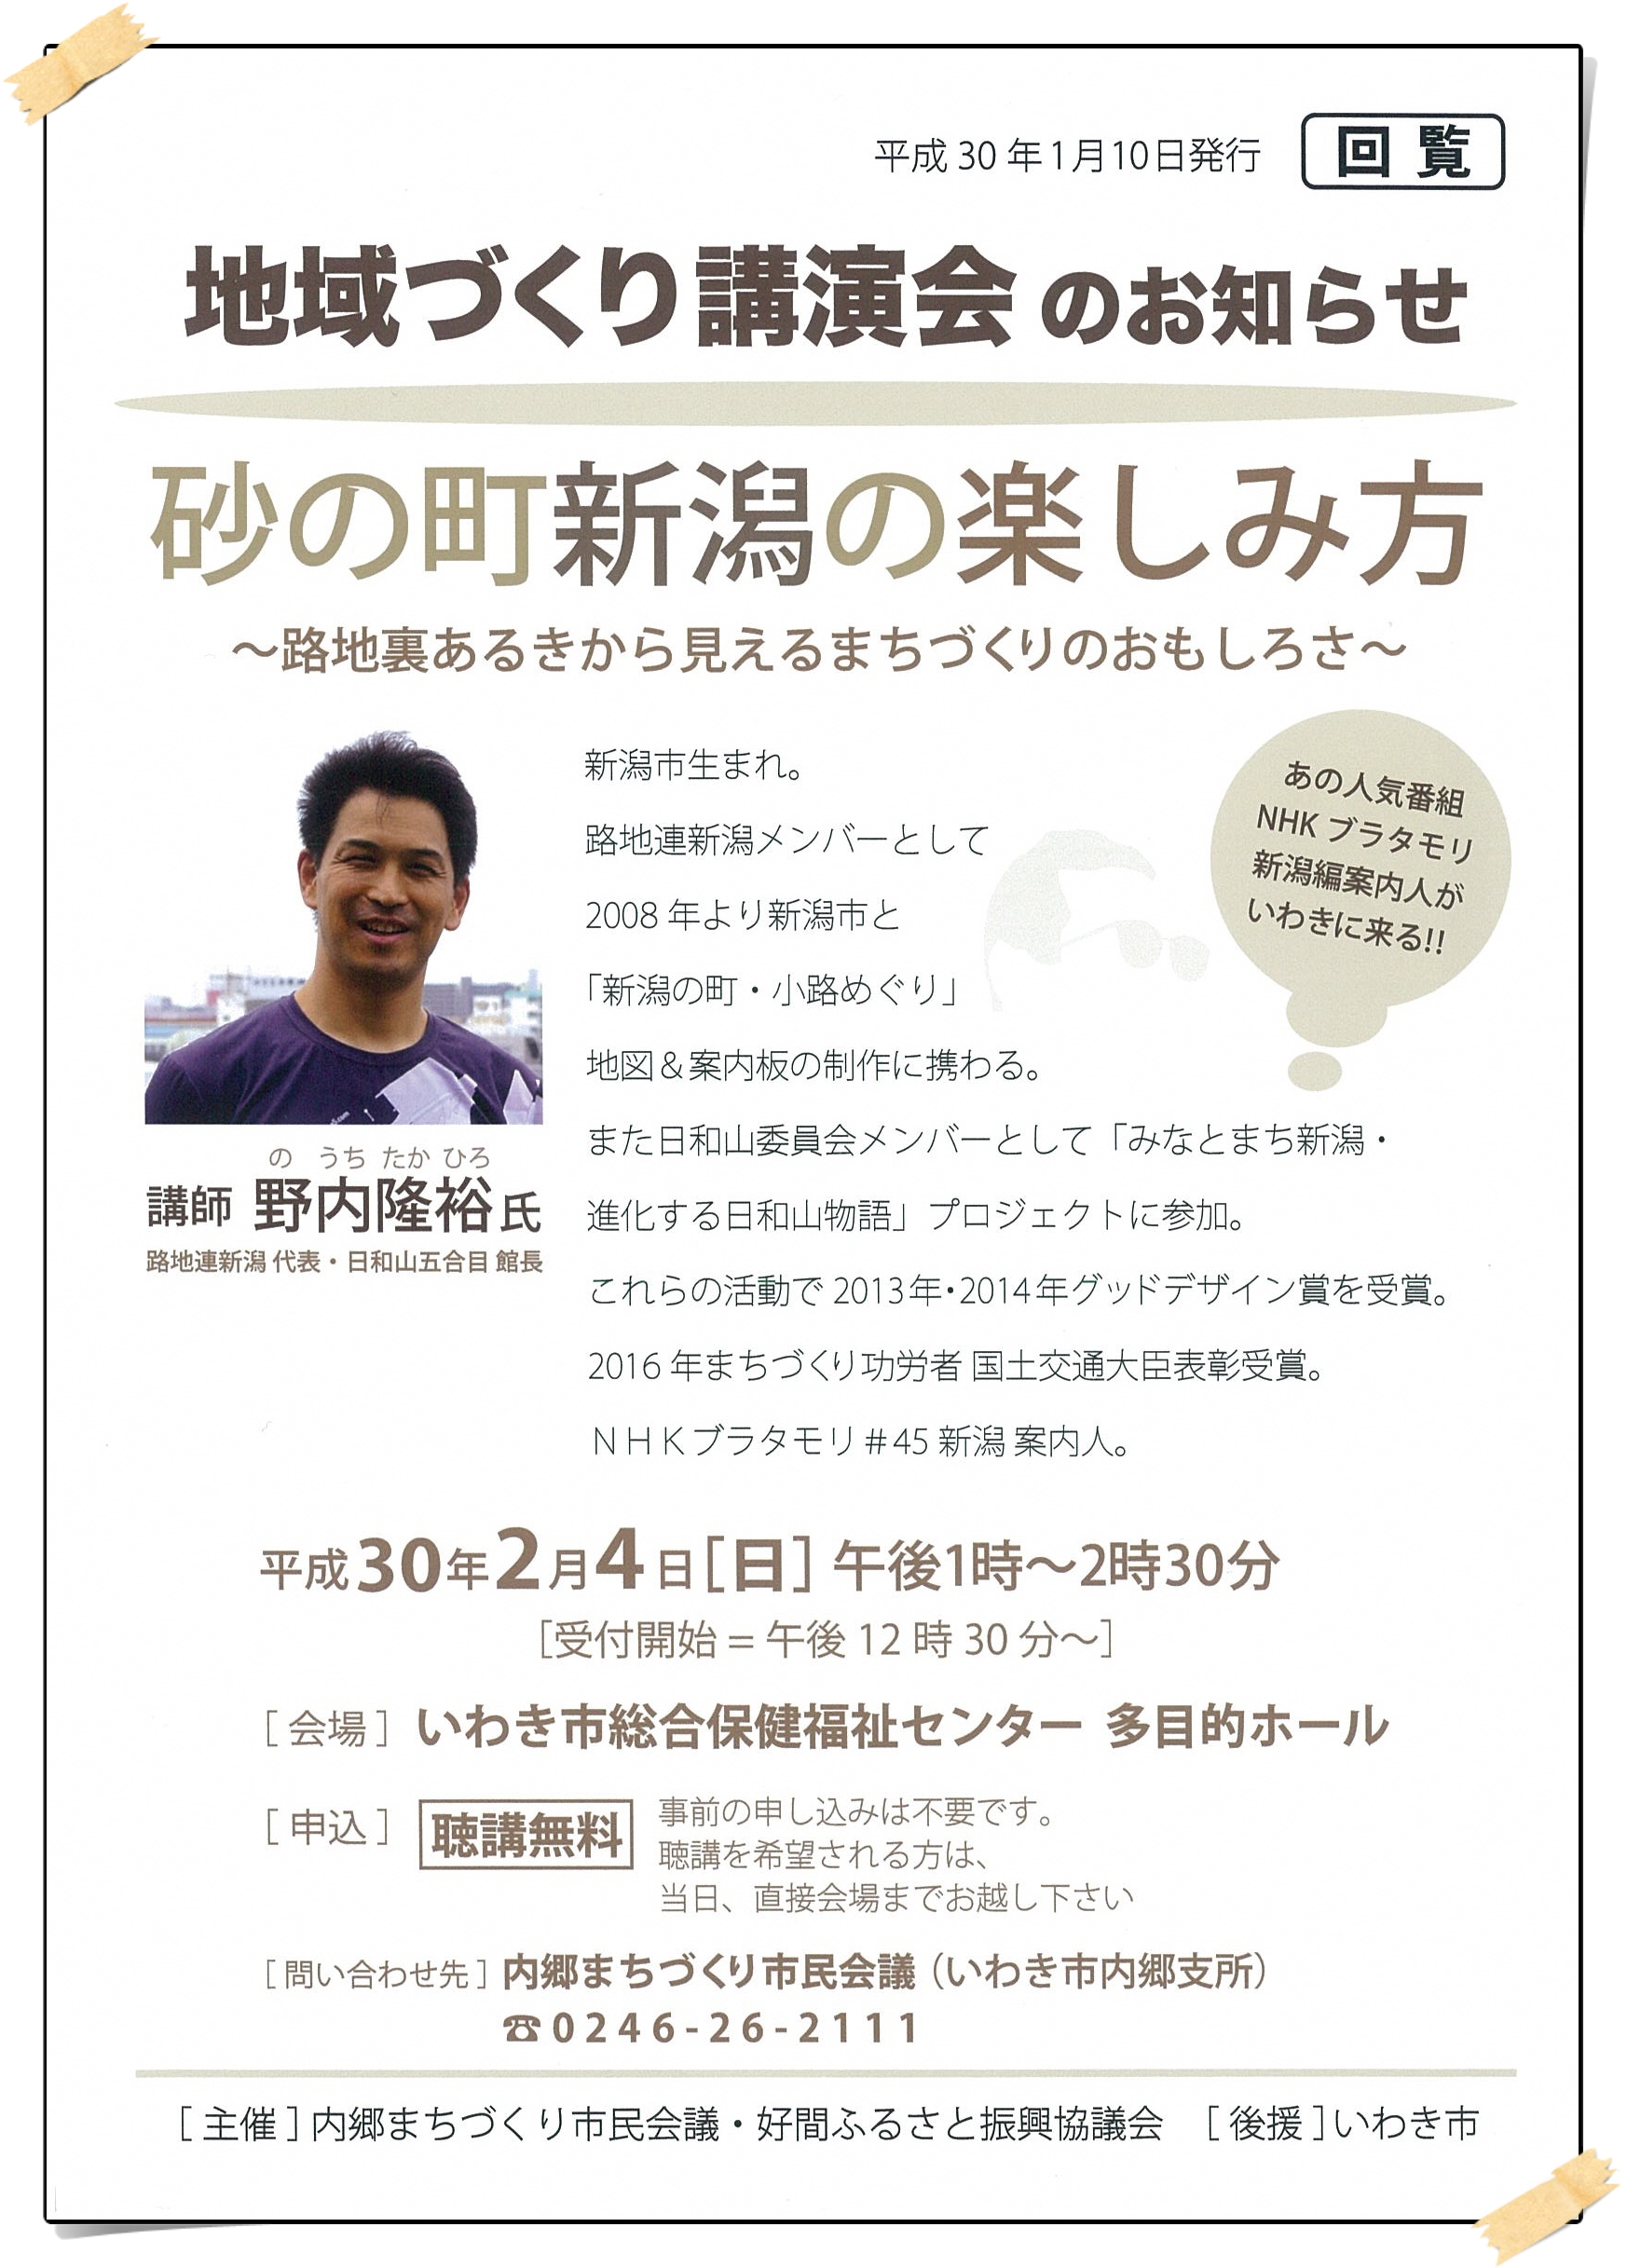 NHKブラタモリ新潟編案内人がいわきに来る！！　地域づくり講演会を2月4日（日）に開催　［平成30年1月22日（月）更新］